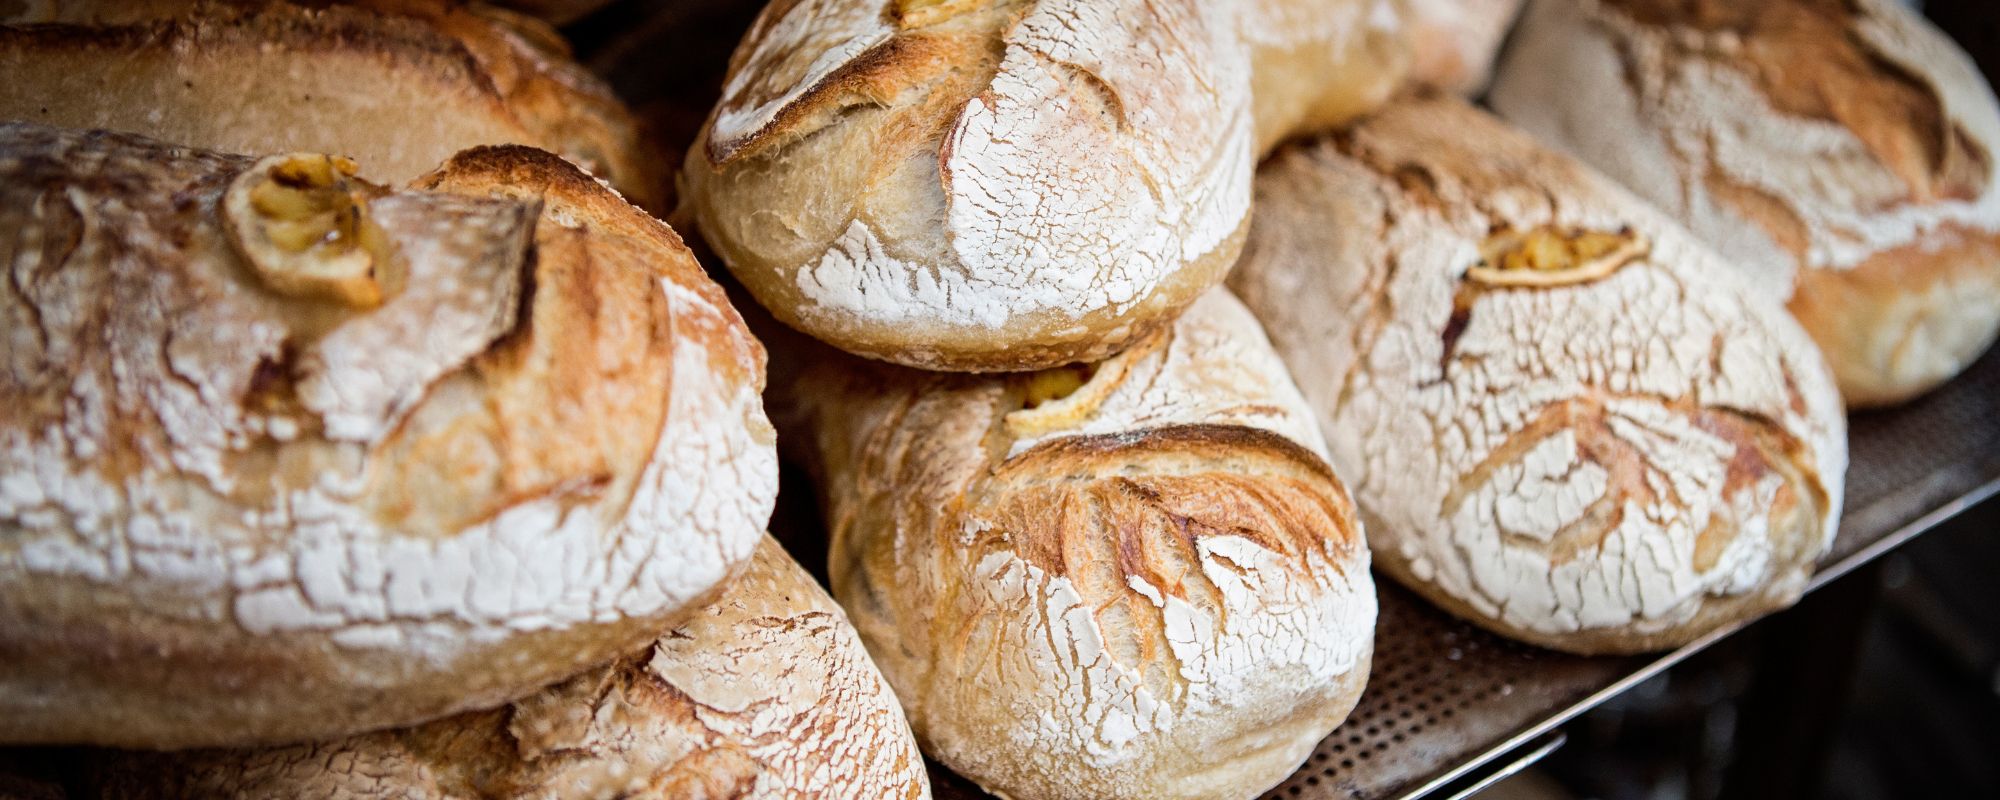 Guerra e... pane: le turbolenti origini del pane sciapo umbro